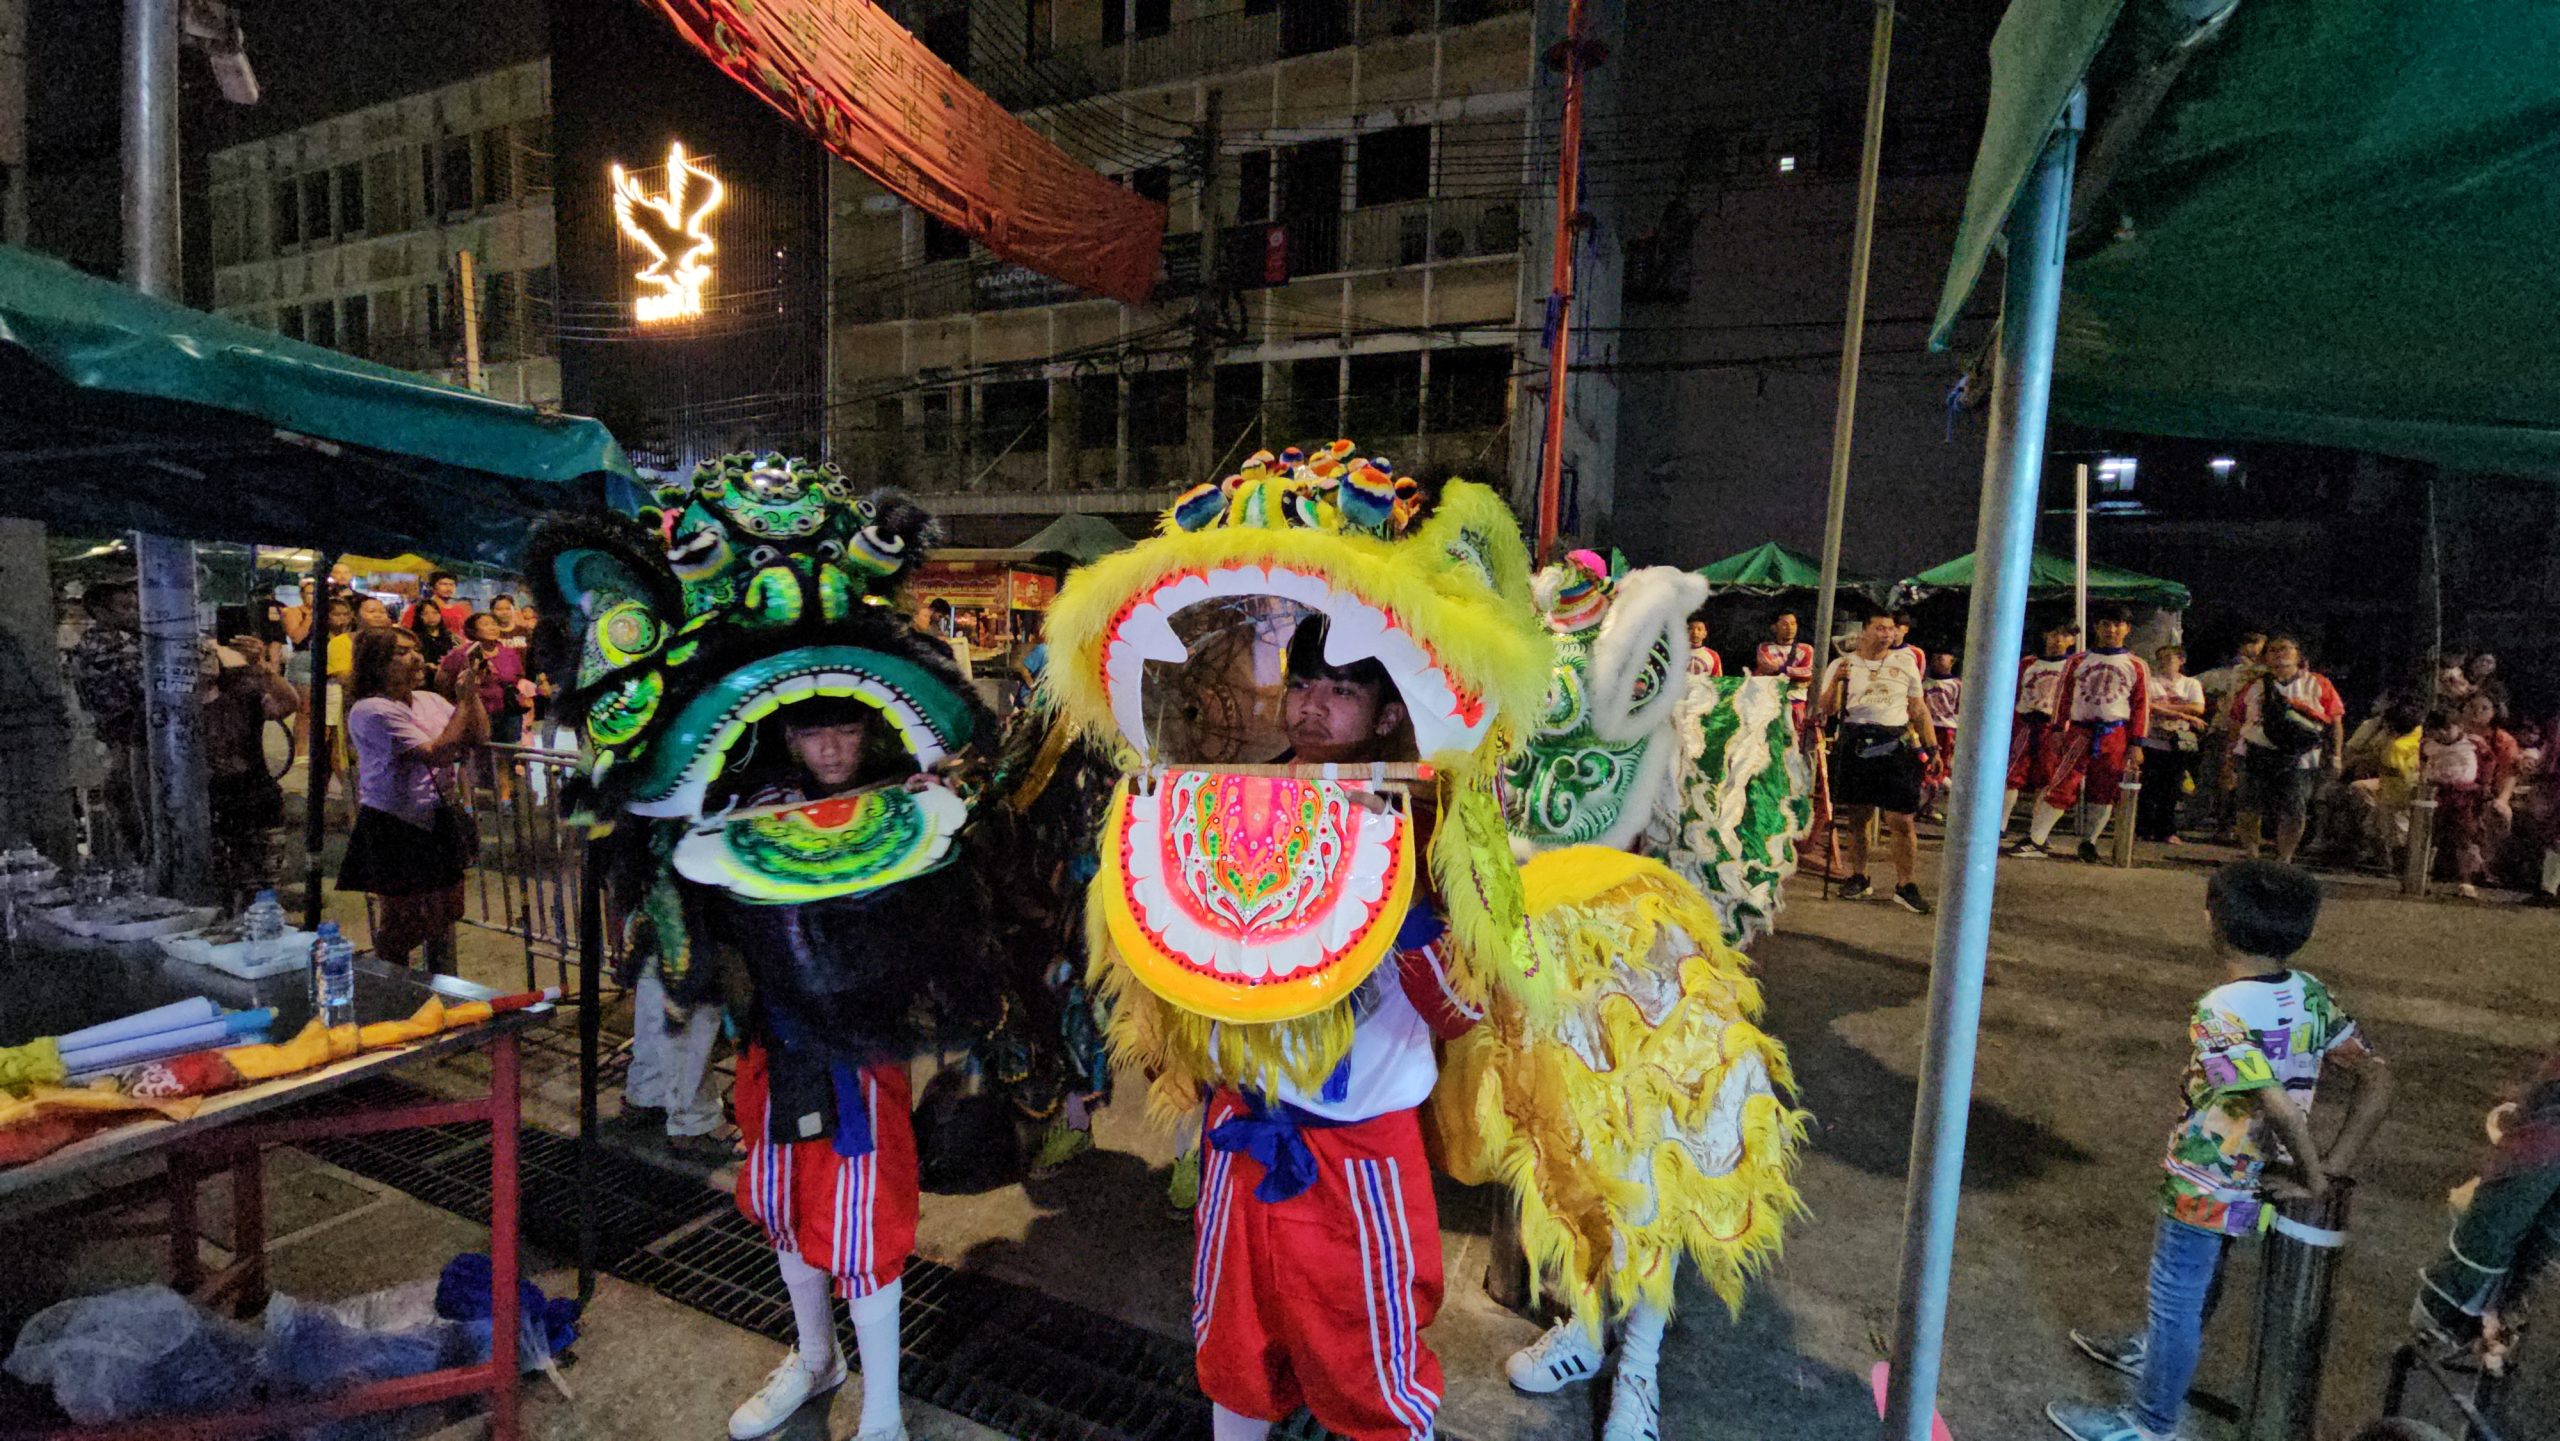 Tańce smoków na ulicach Bangkoku - Tajlandia